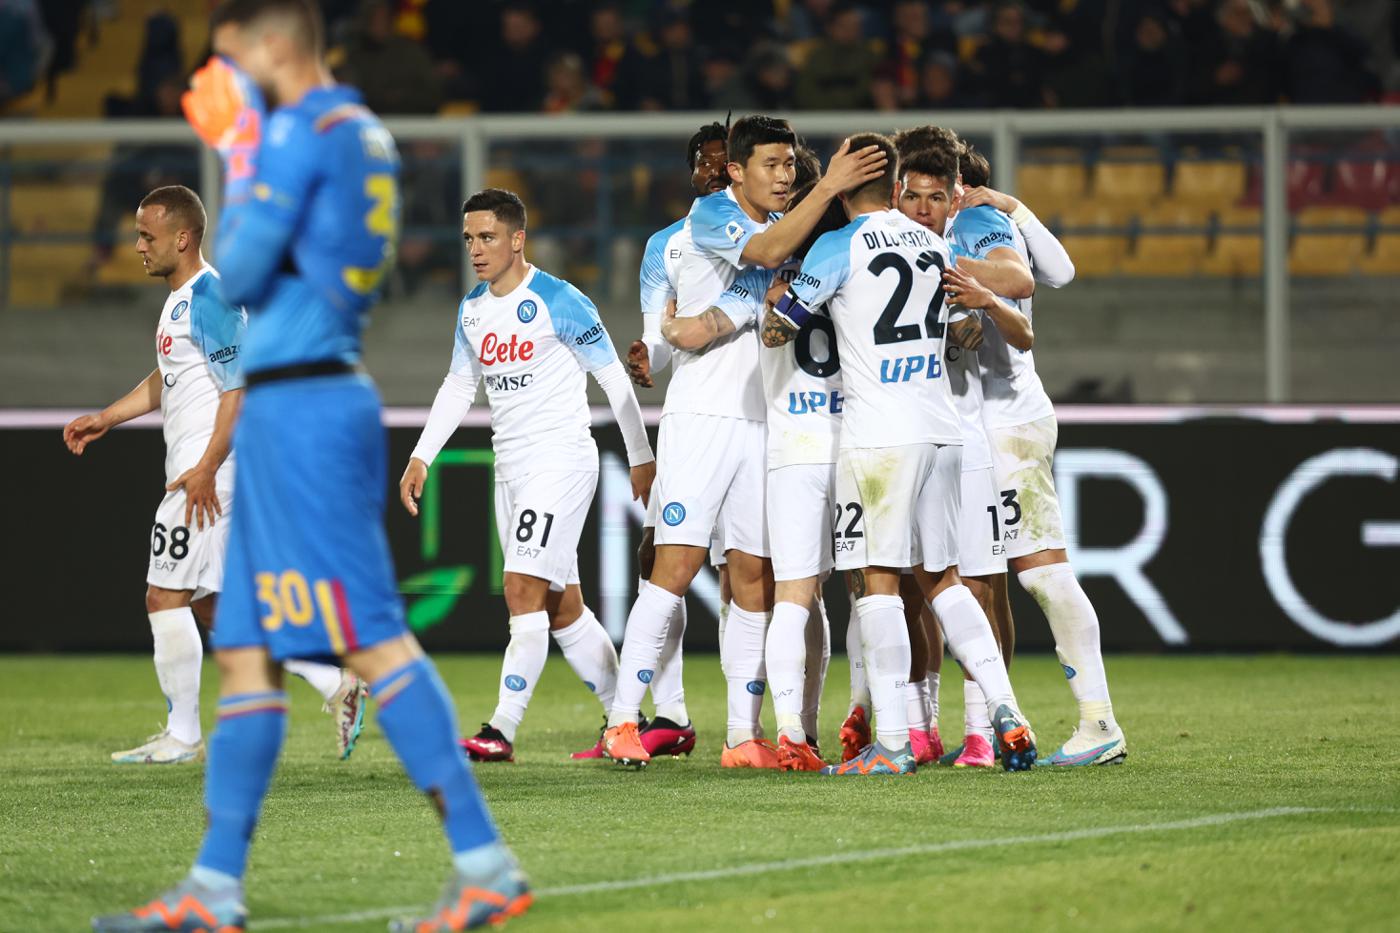 Lecce - Napoli - 1:2. Italian Championship, round of 29. Match review, statistics